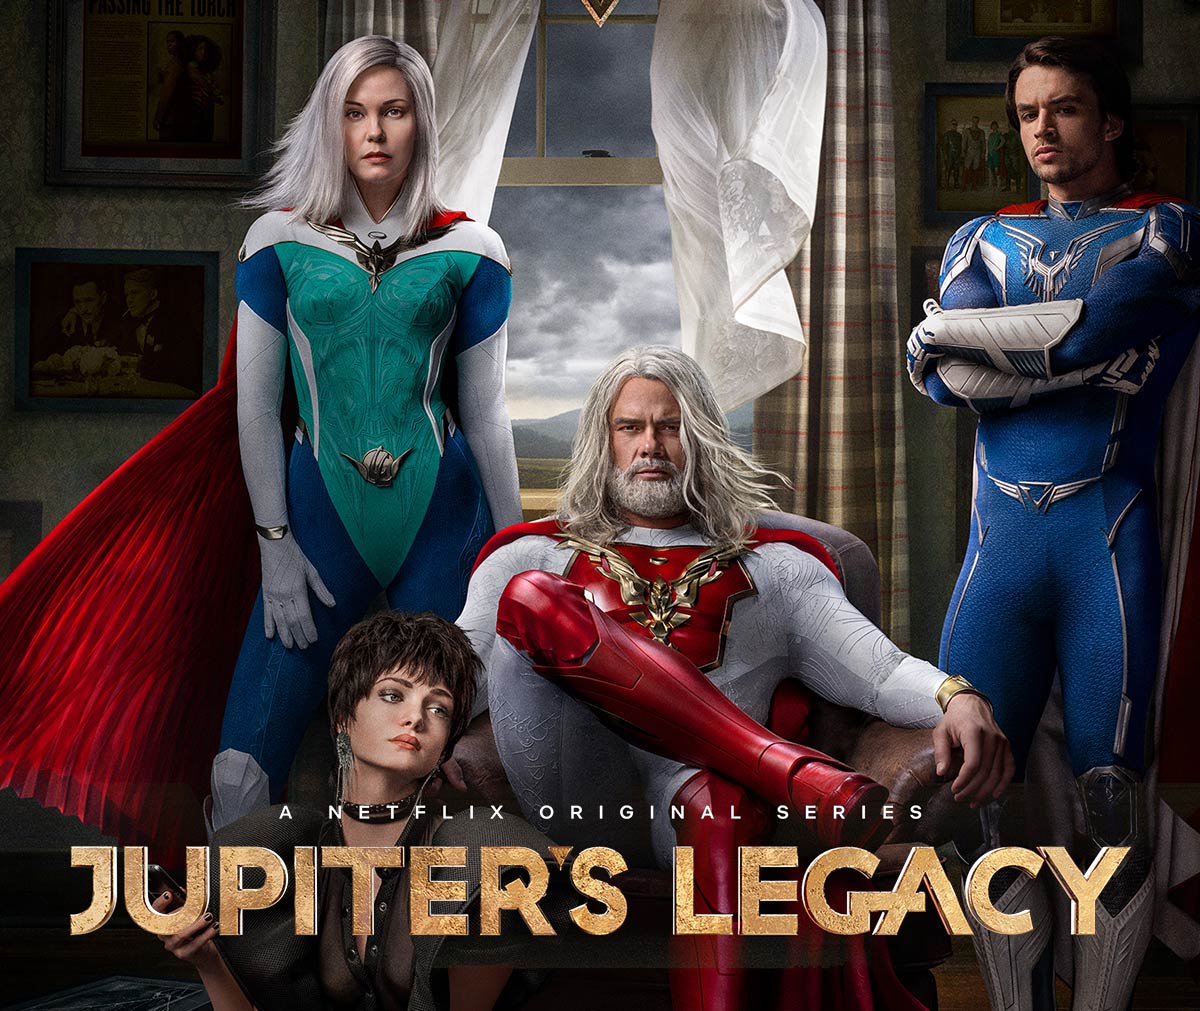 ‘Jupiter’s Legacy’ Trailer: No Legend Lives Forever In Mark Millar’s Netflix Superhero Series